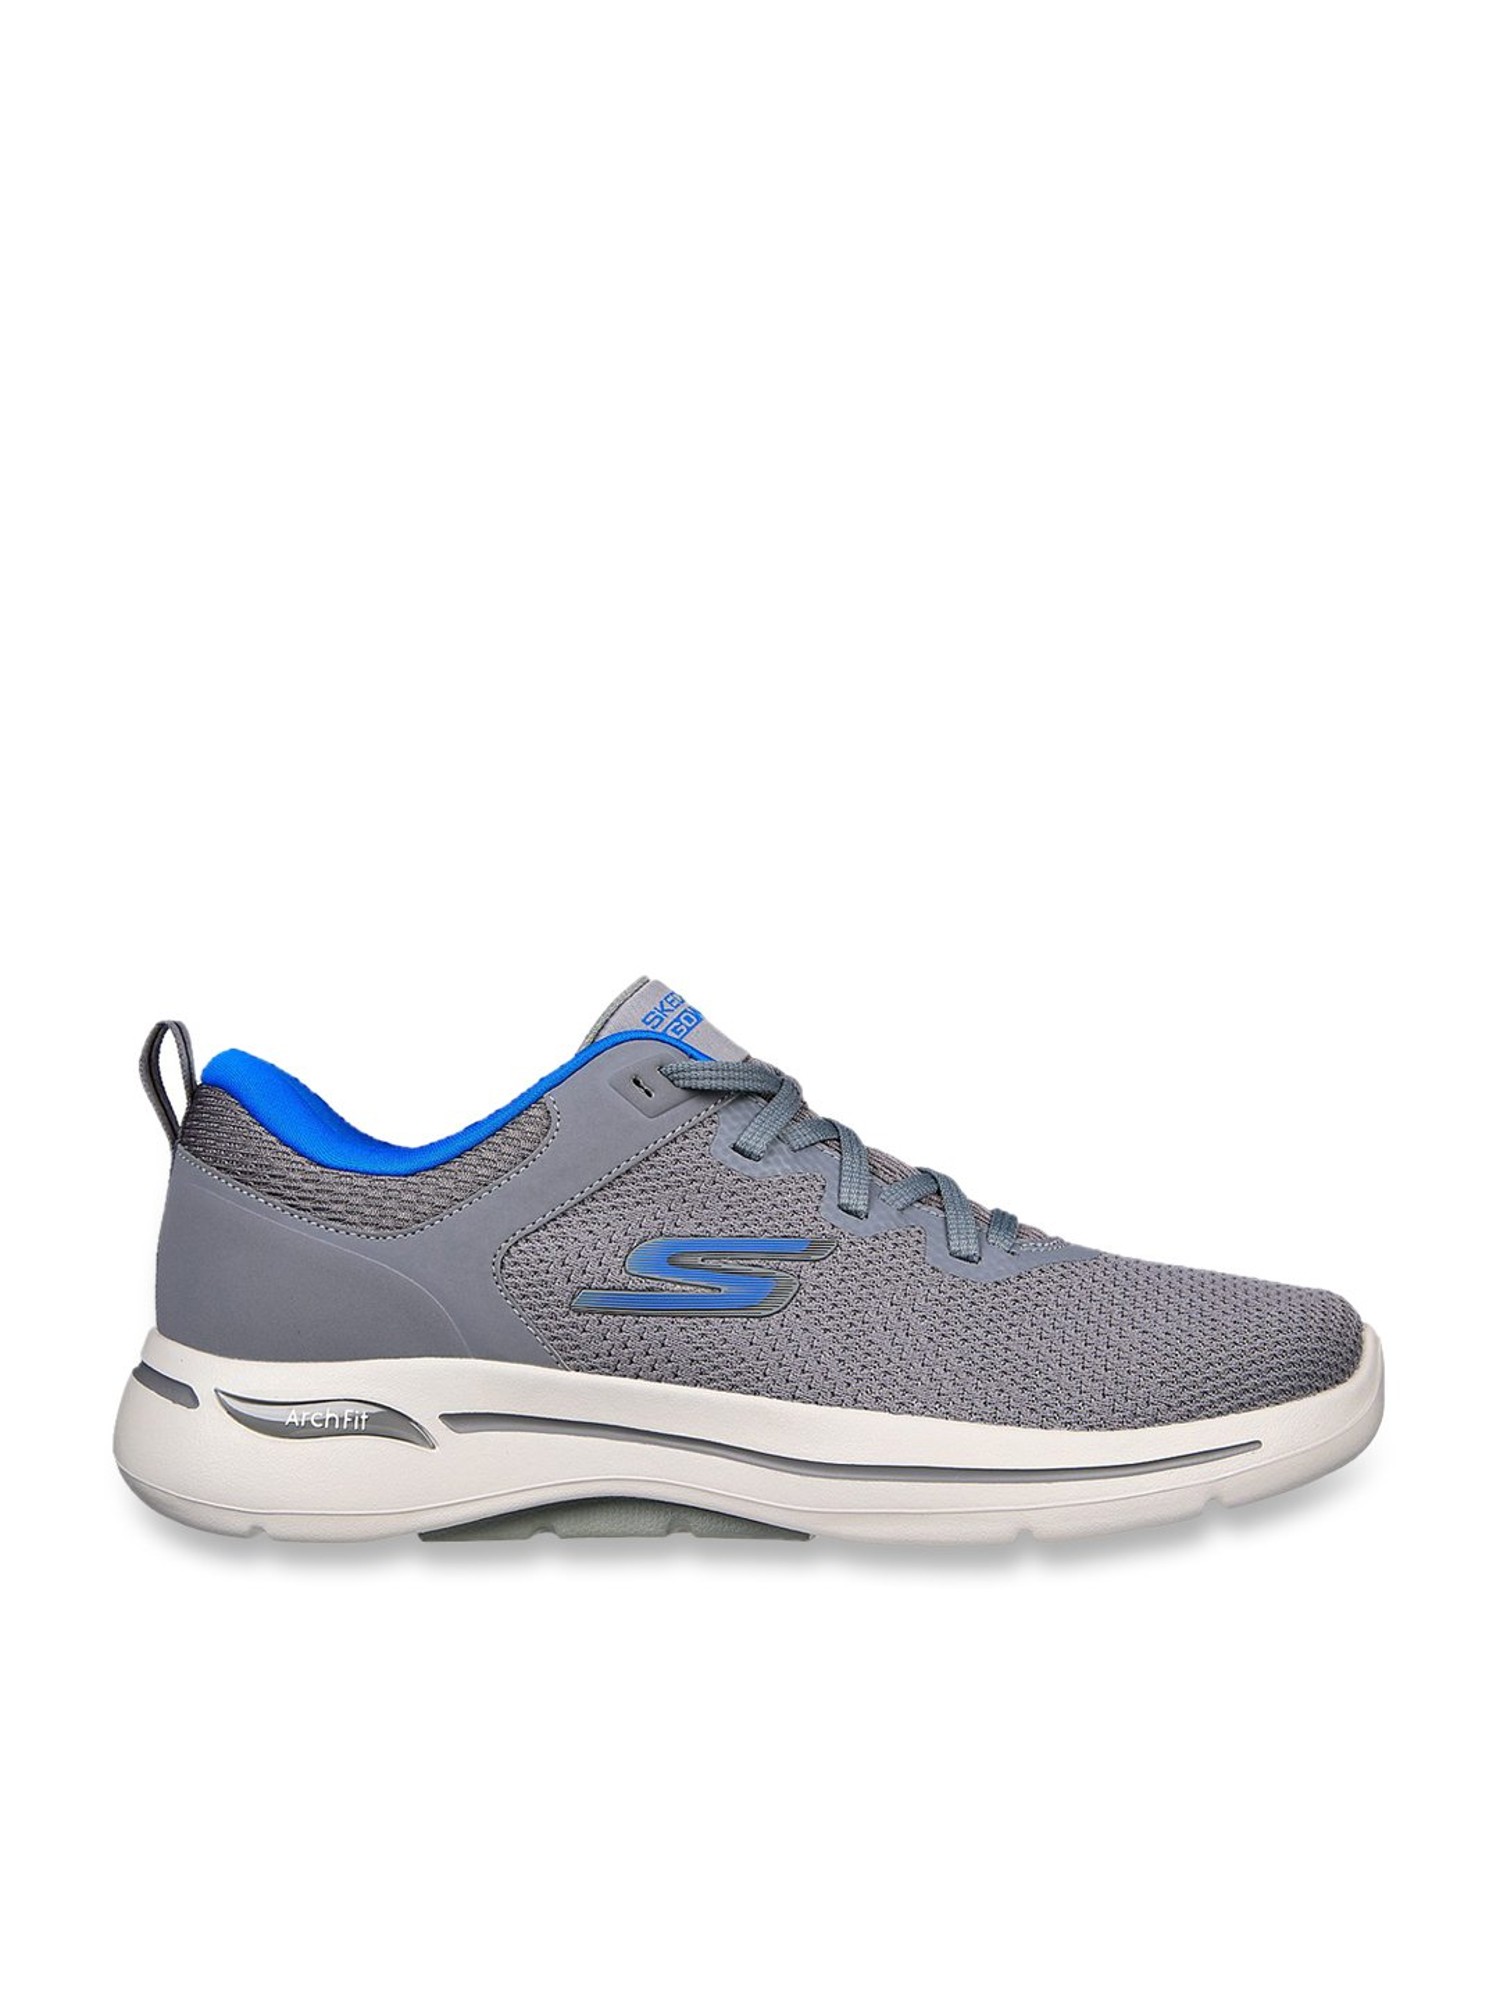 Buy Skechers-GO Walk 6 - MODERNIZED-Men's Walking Shoes-216275-NAT-NATURAL  UK6 at Amazon.in